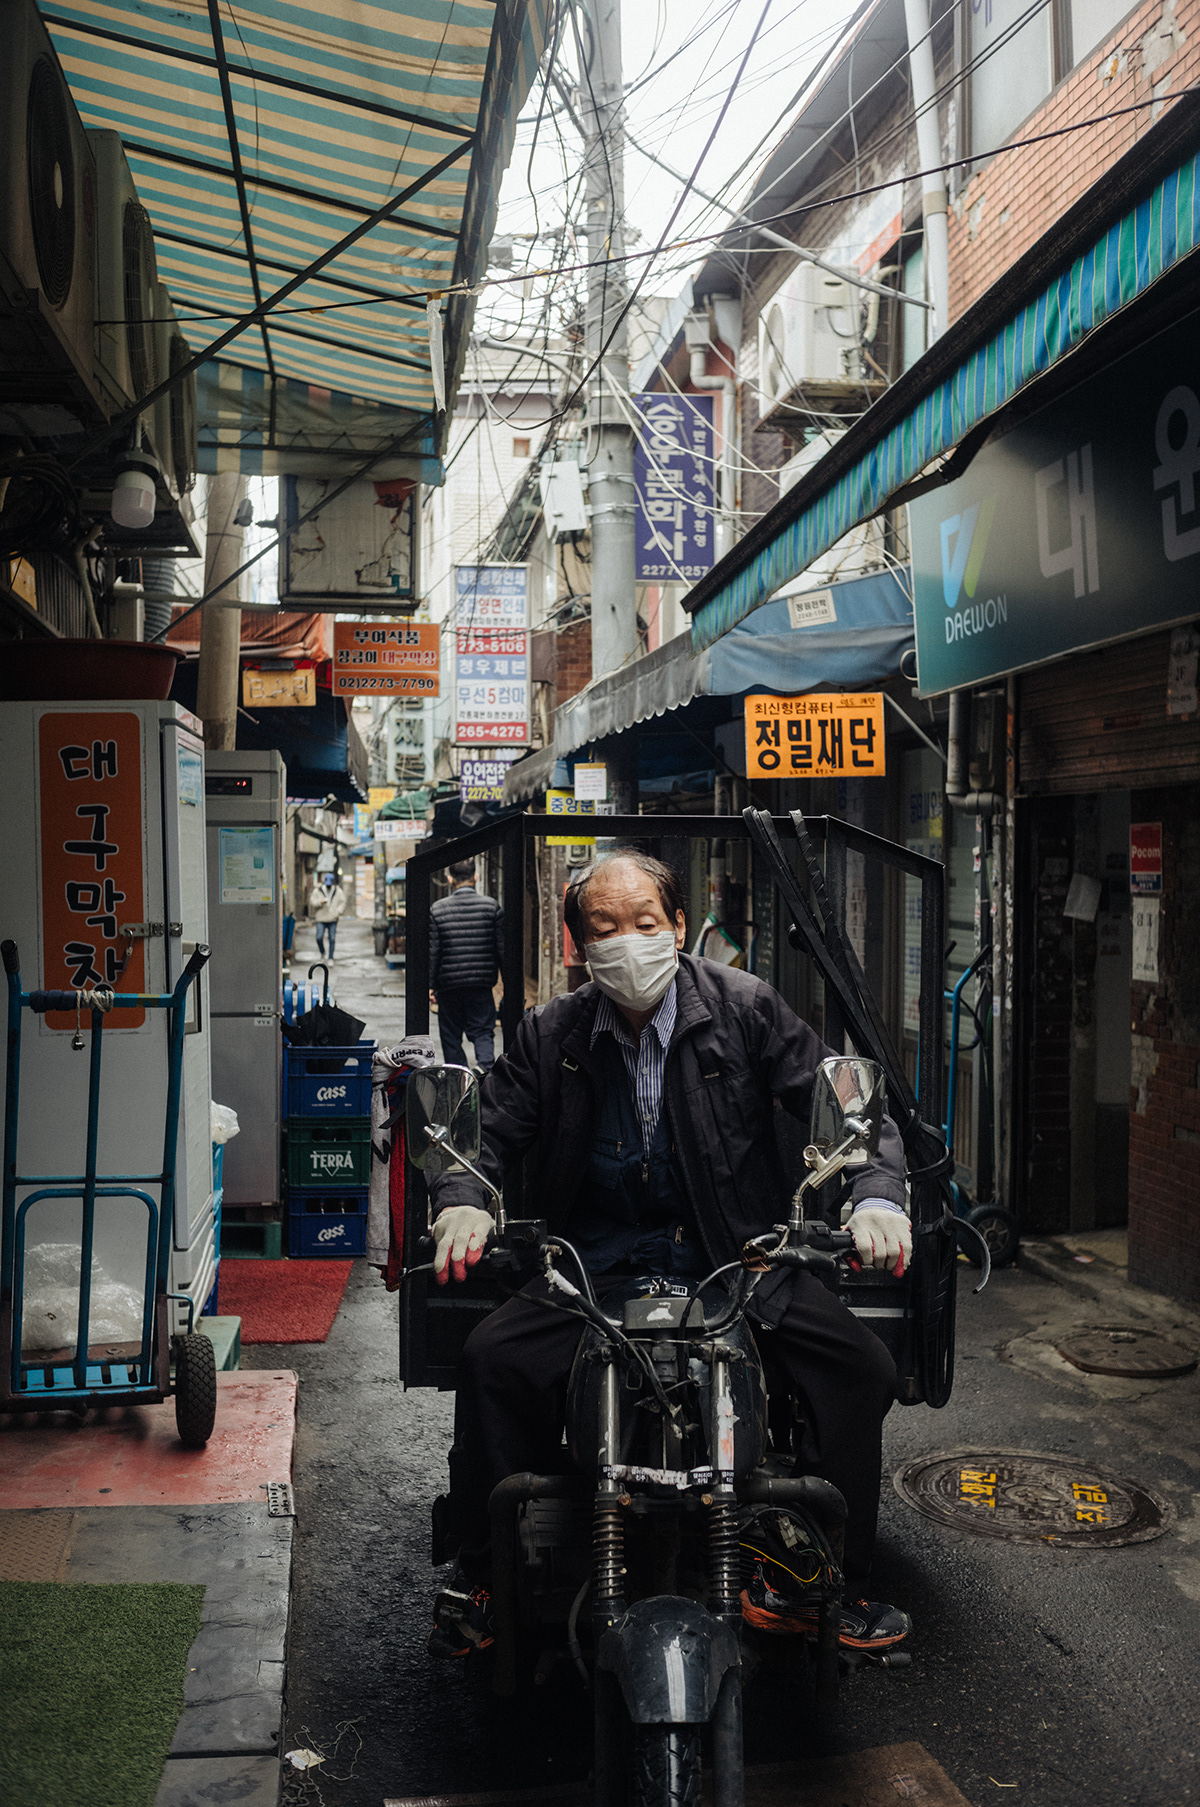 35mm andre josselin city Leica leica m11 seoul Street street photography Travel q3